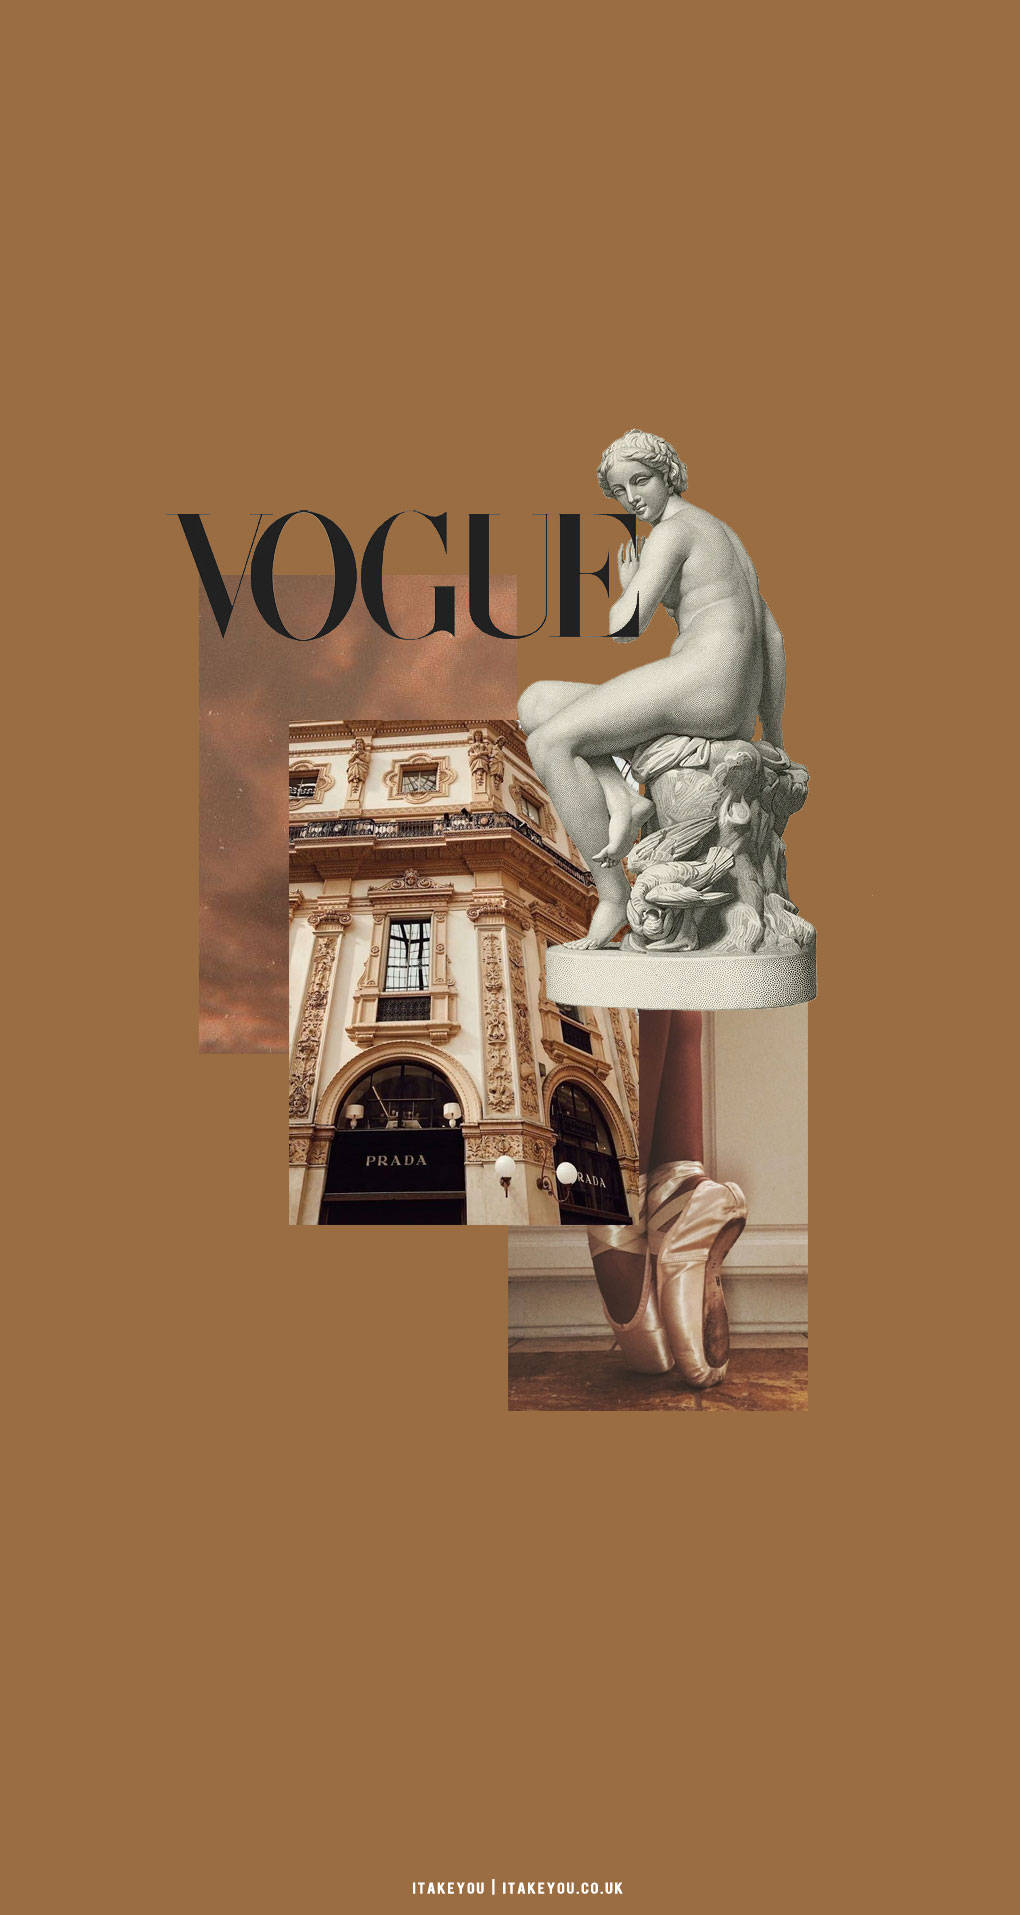 Vogue Magazine Beige Brown Aesthetic